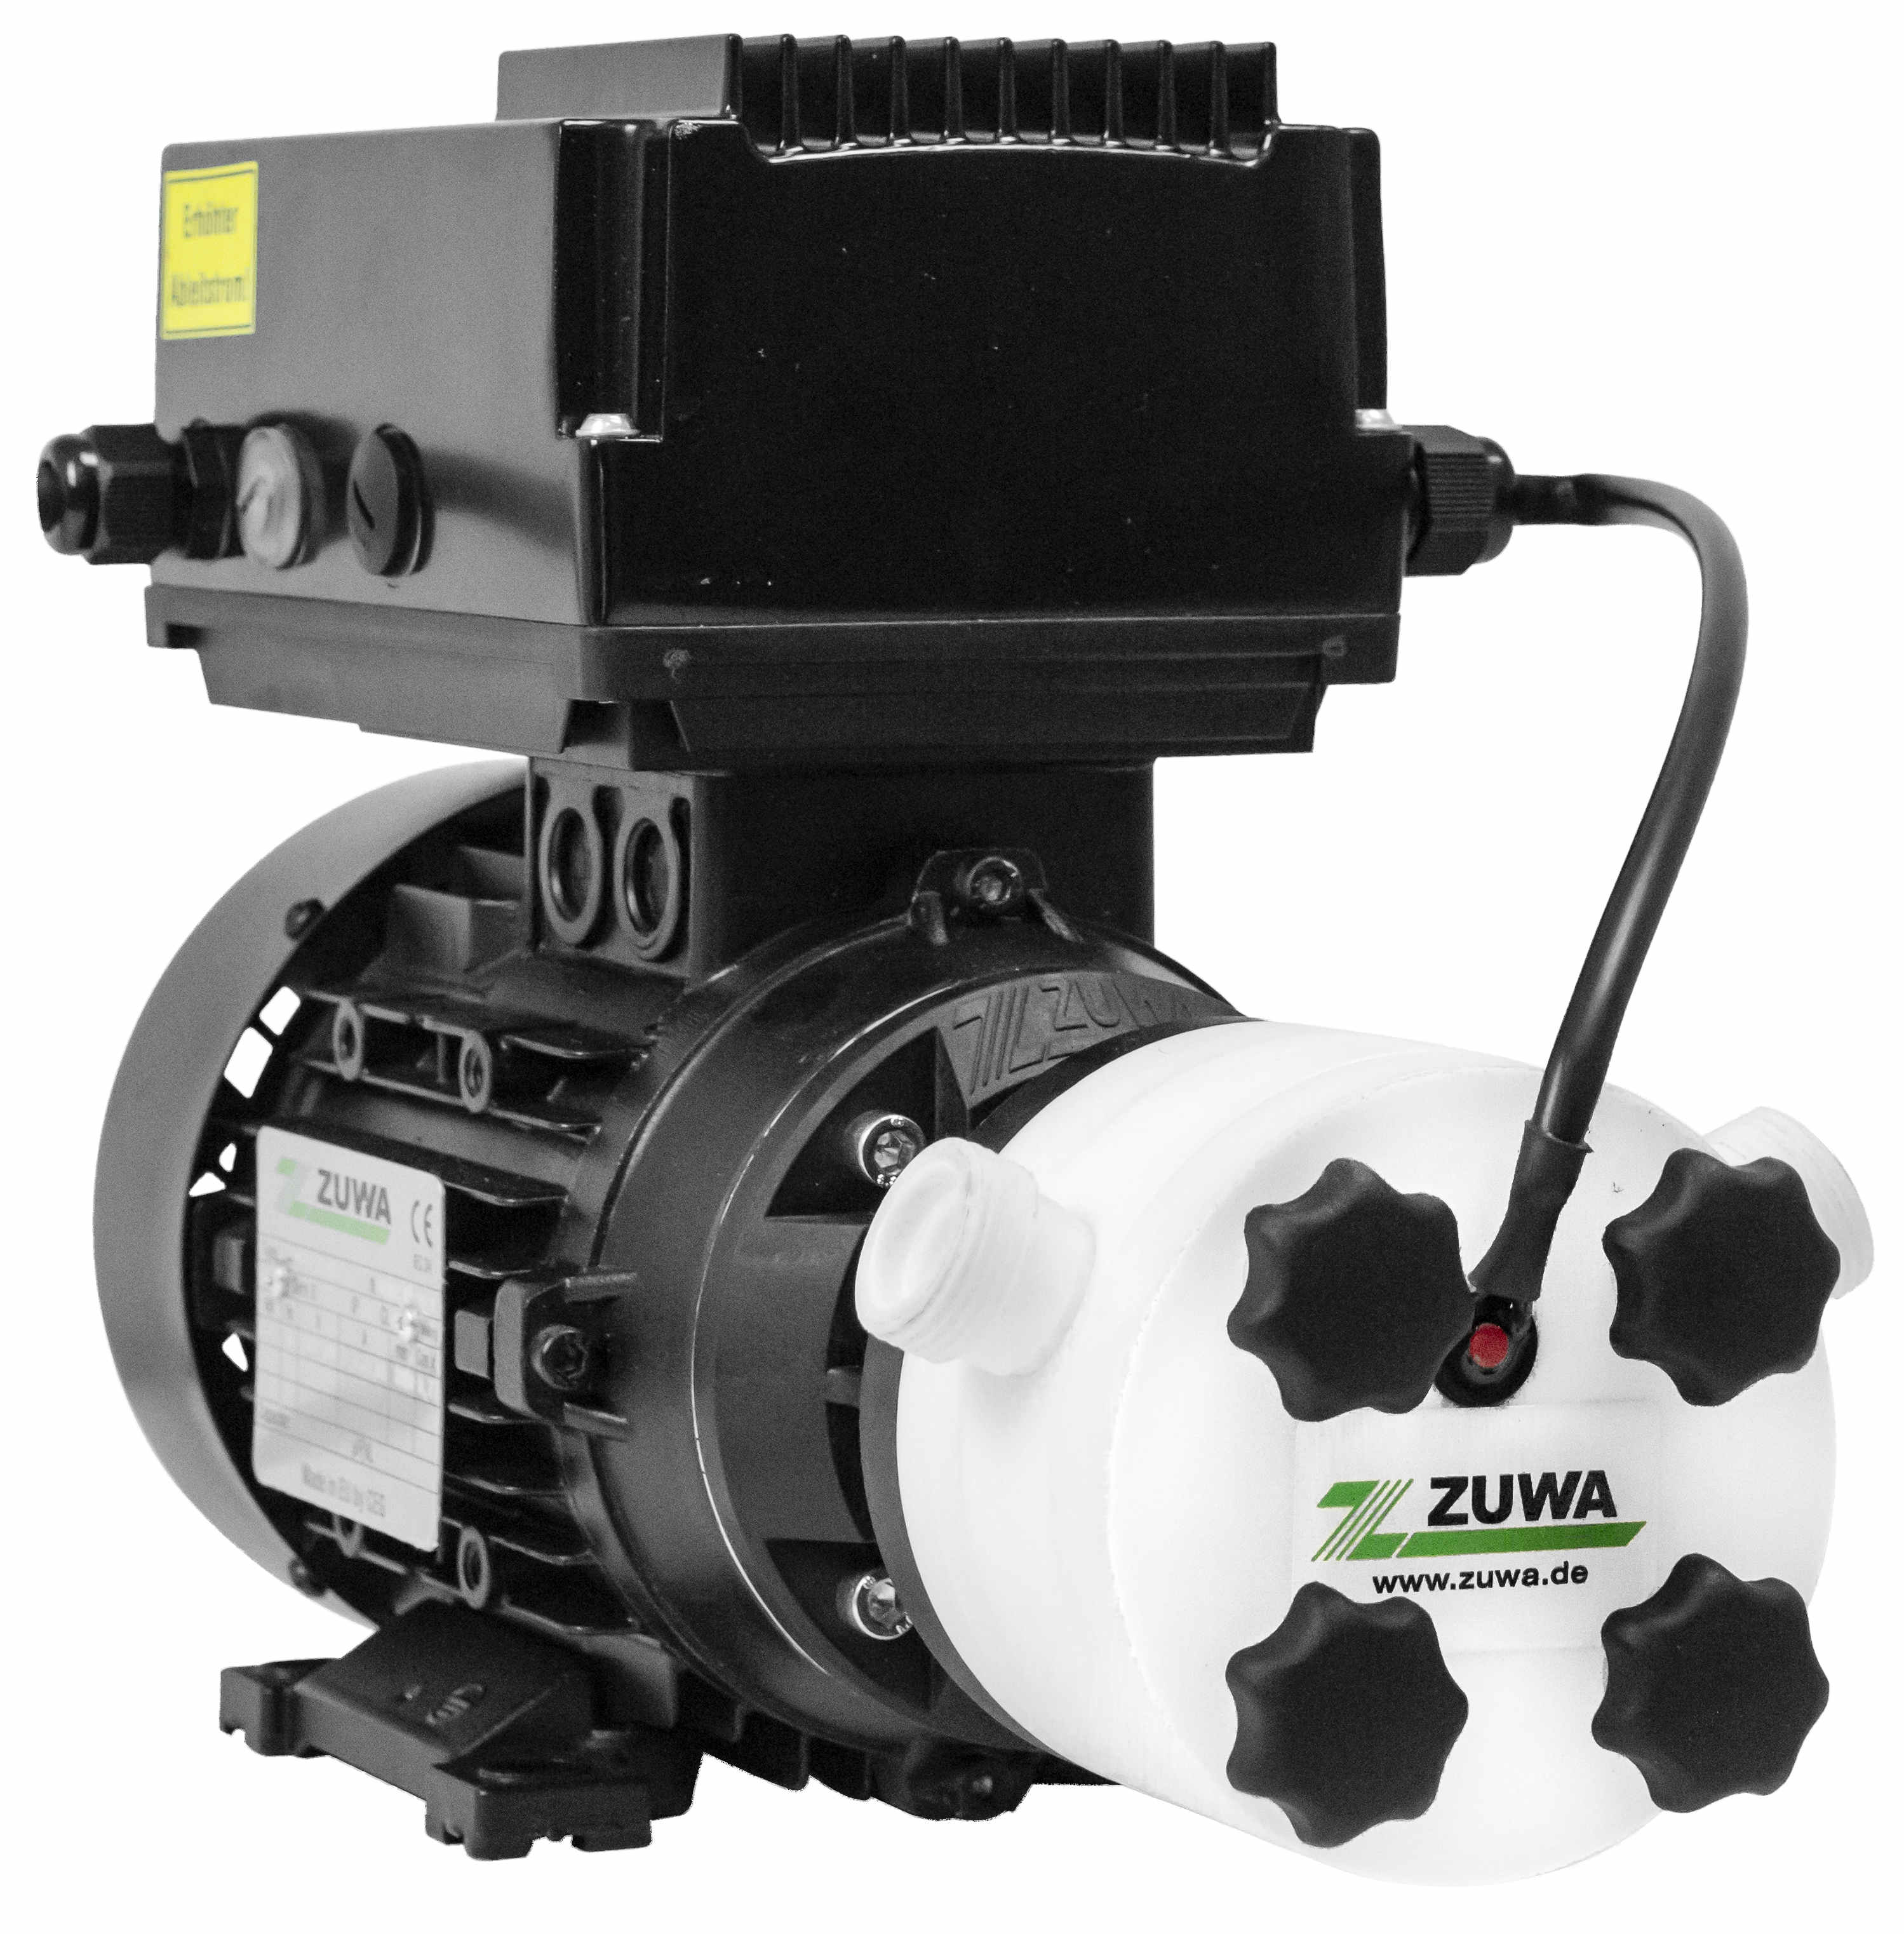 Zuwa Impellerpumpe ACOSTAR/E 2000-A/PT, 30 l/min, 230V FU - 14129127420A